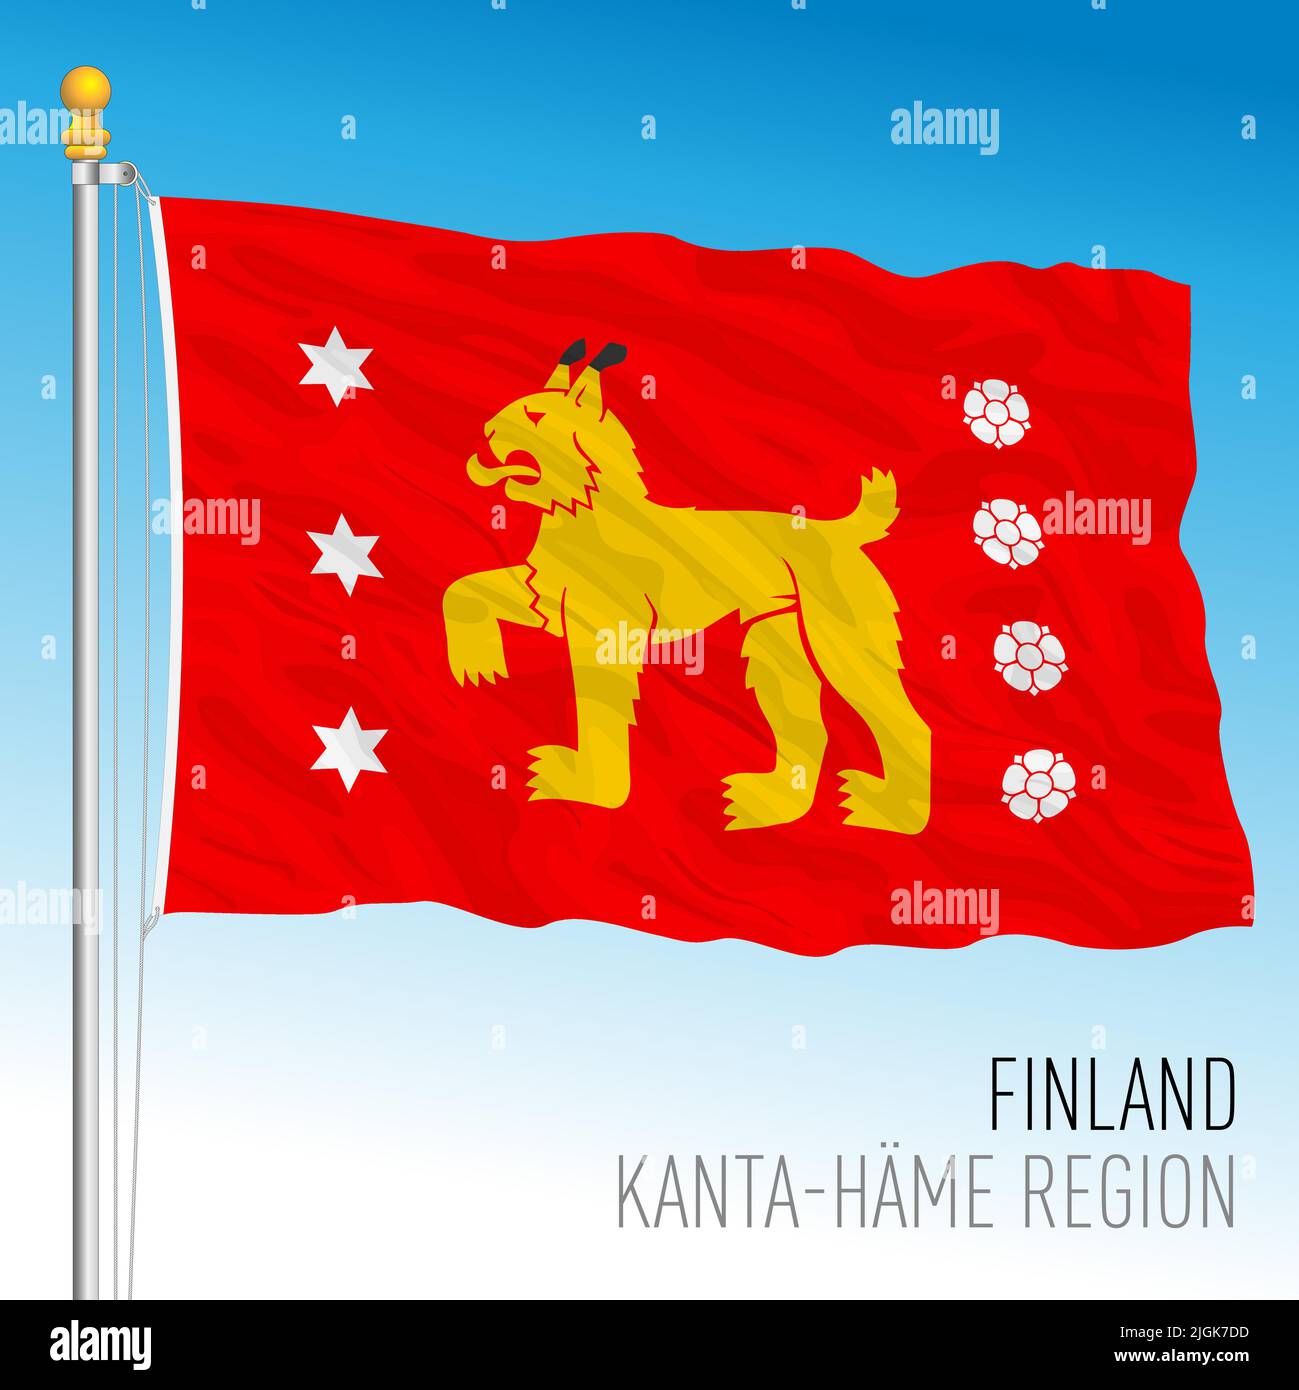 Kanta-Hame regional flag, Republic of Finland, EU, vector illustration Stock Vector